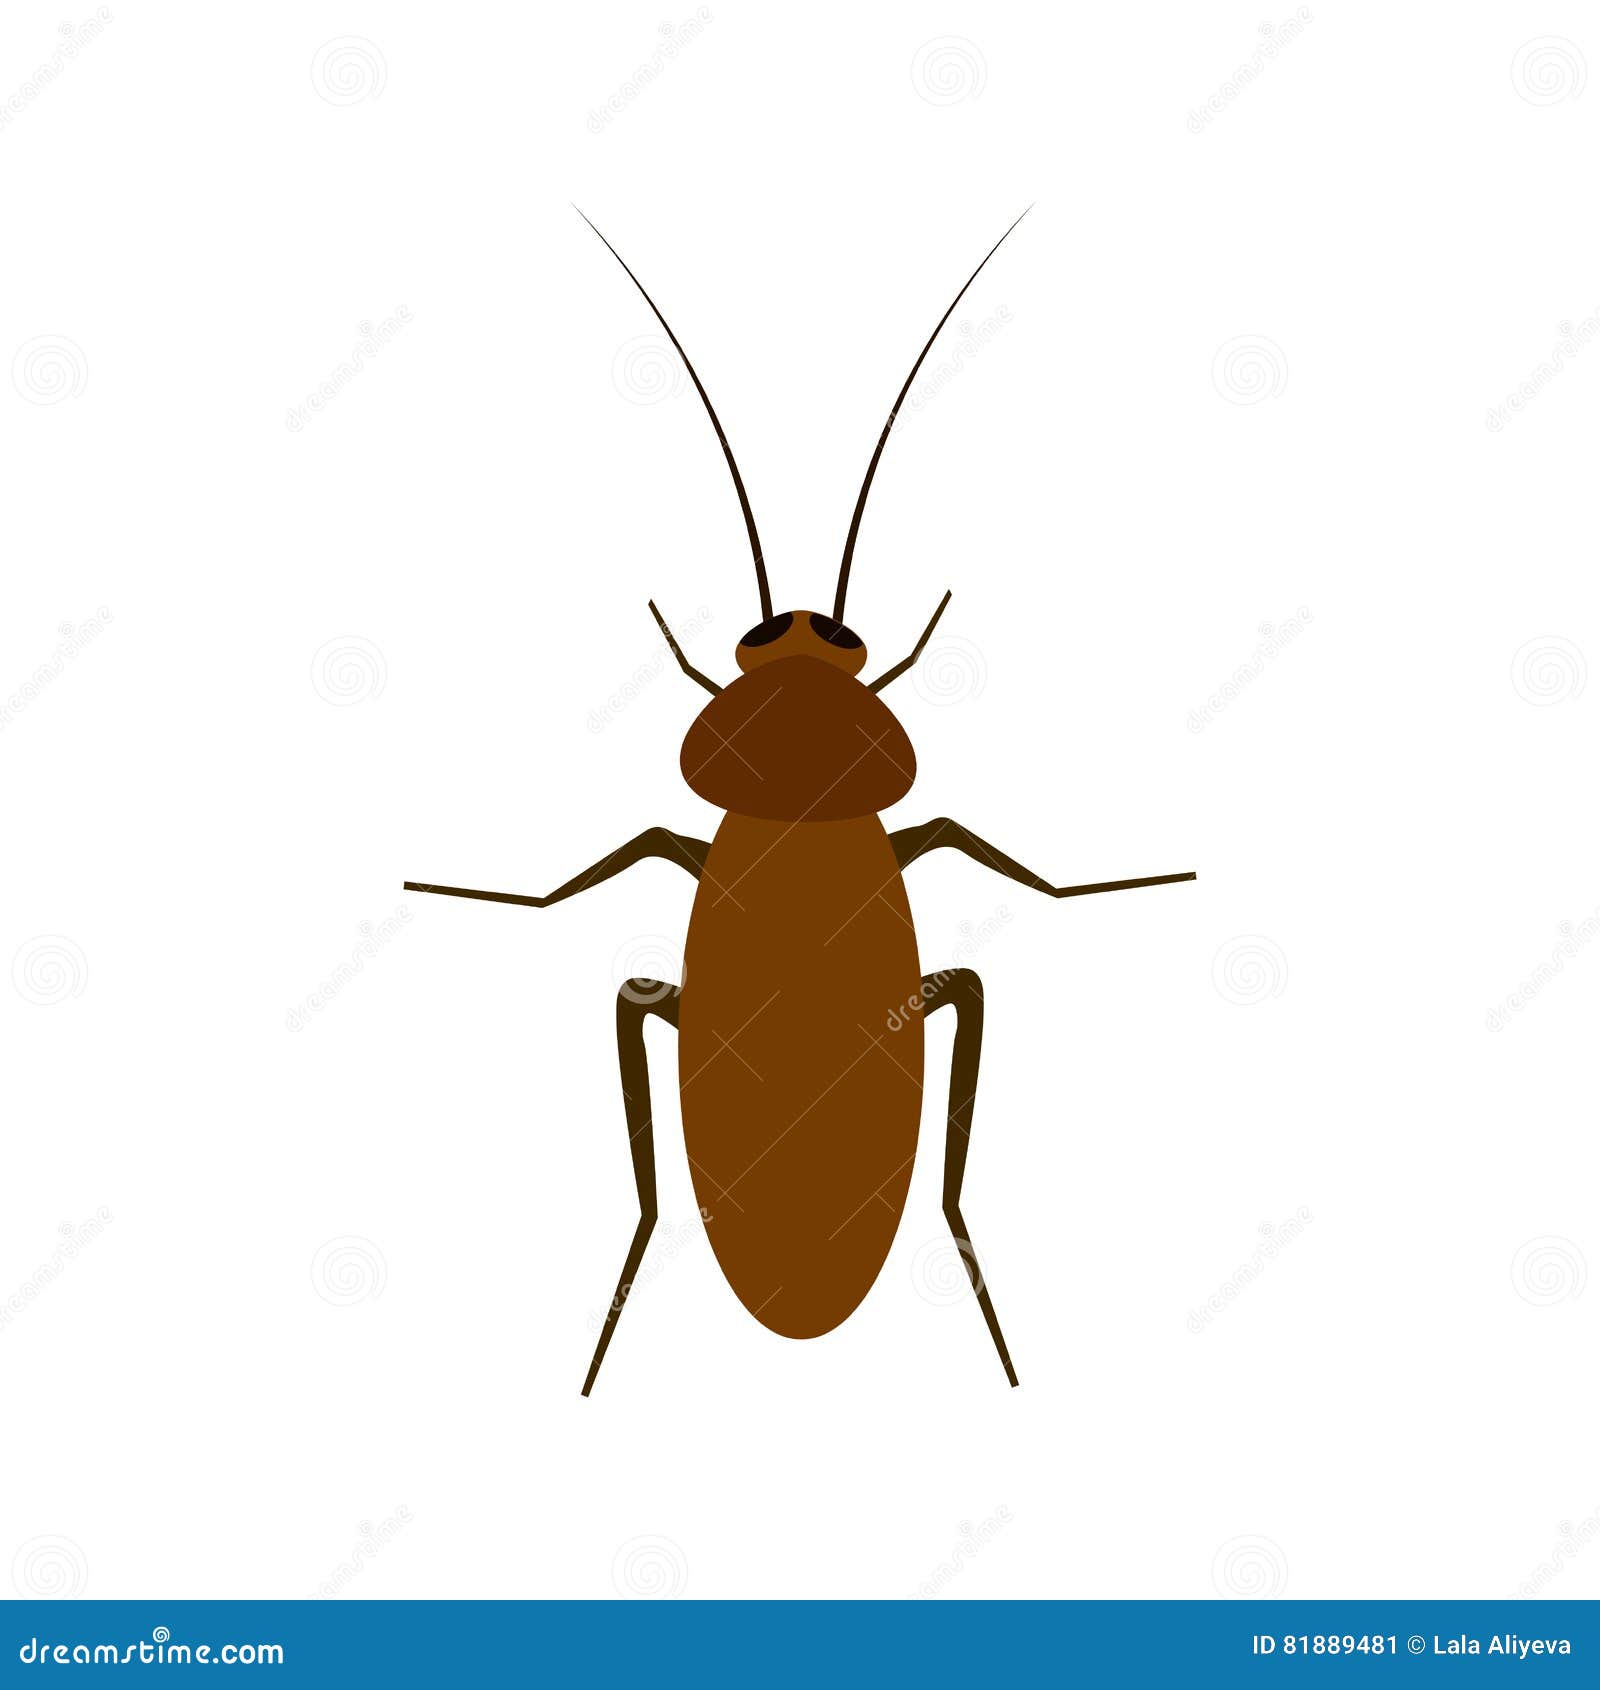 Cockroach Illustration On A White Background Stock Illustration ...